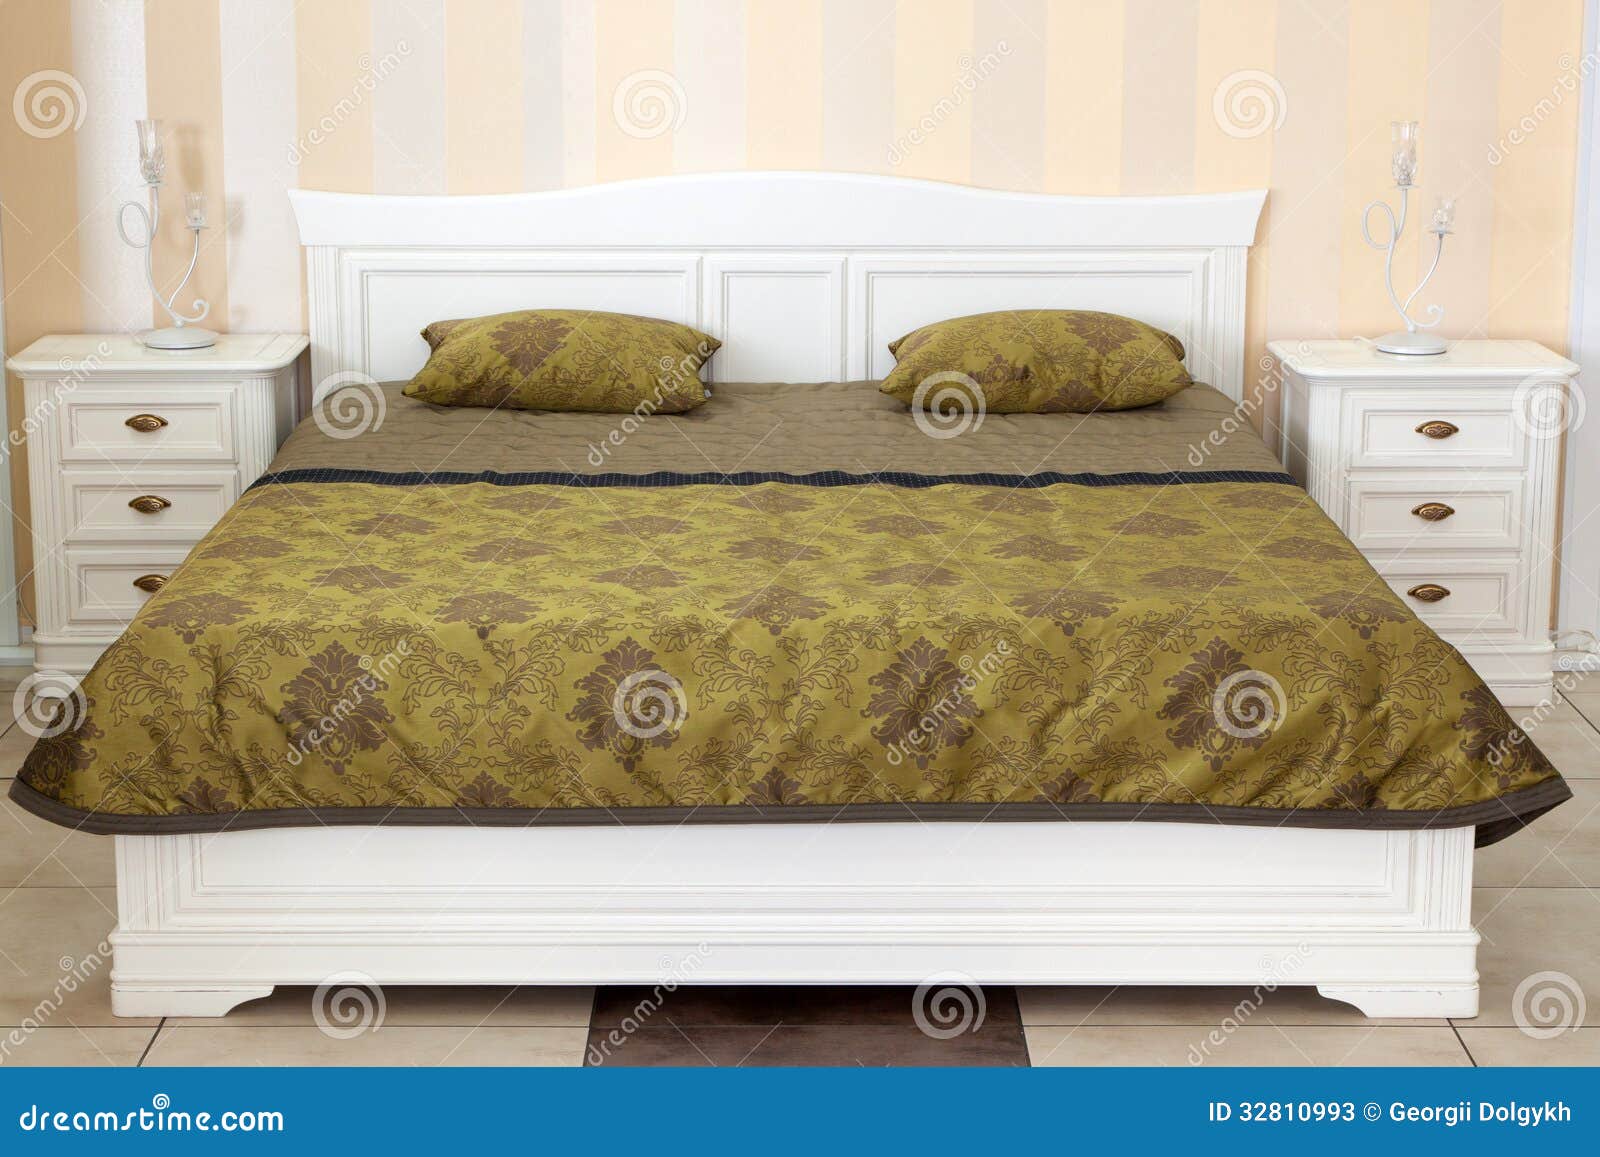 Modern Italian Style Bedroom Stock Photos - Image: 32810993